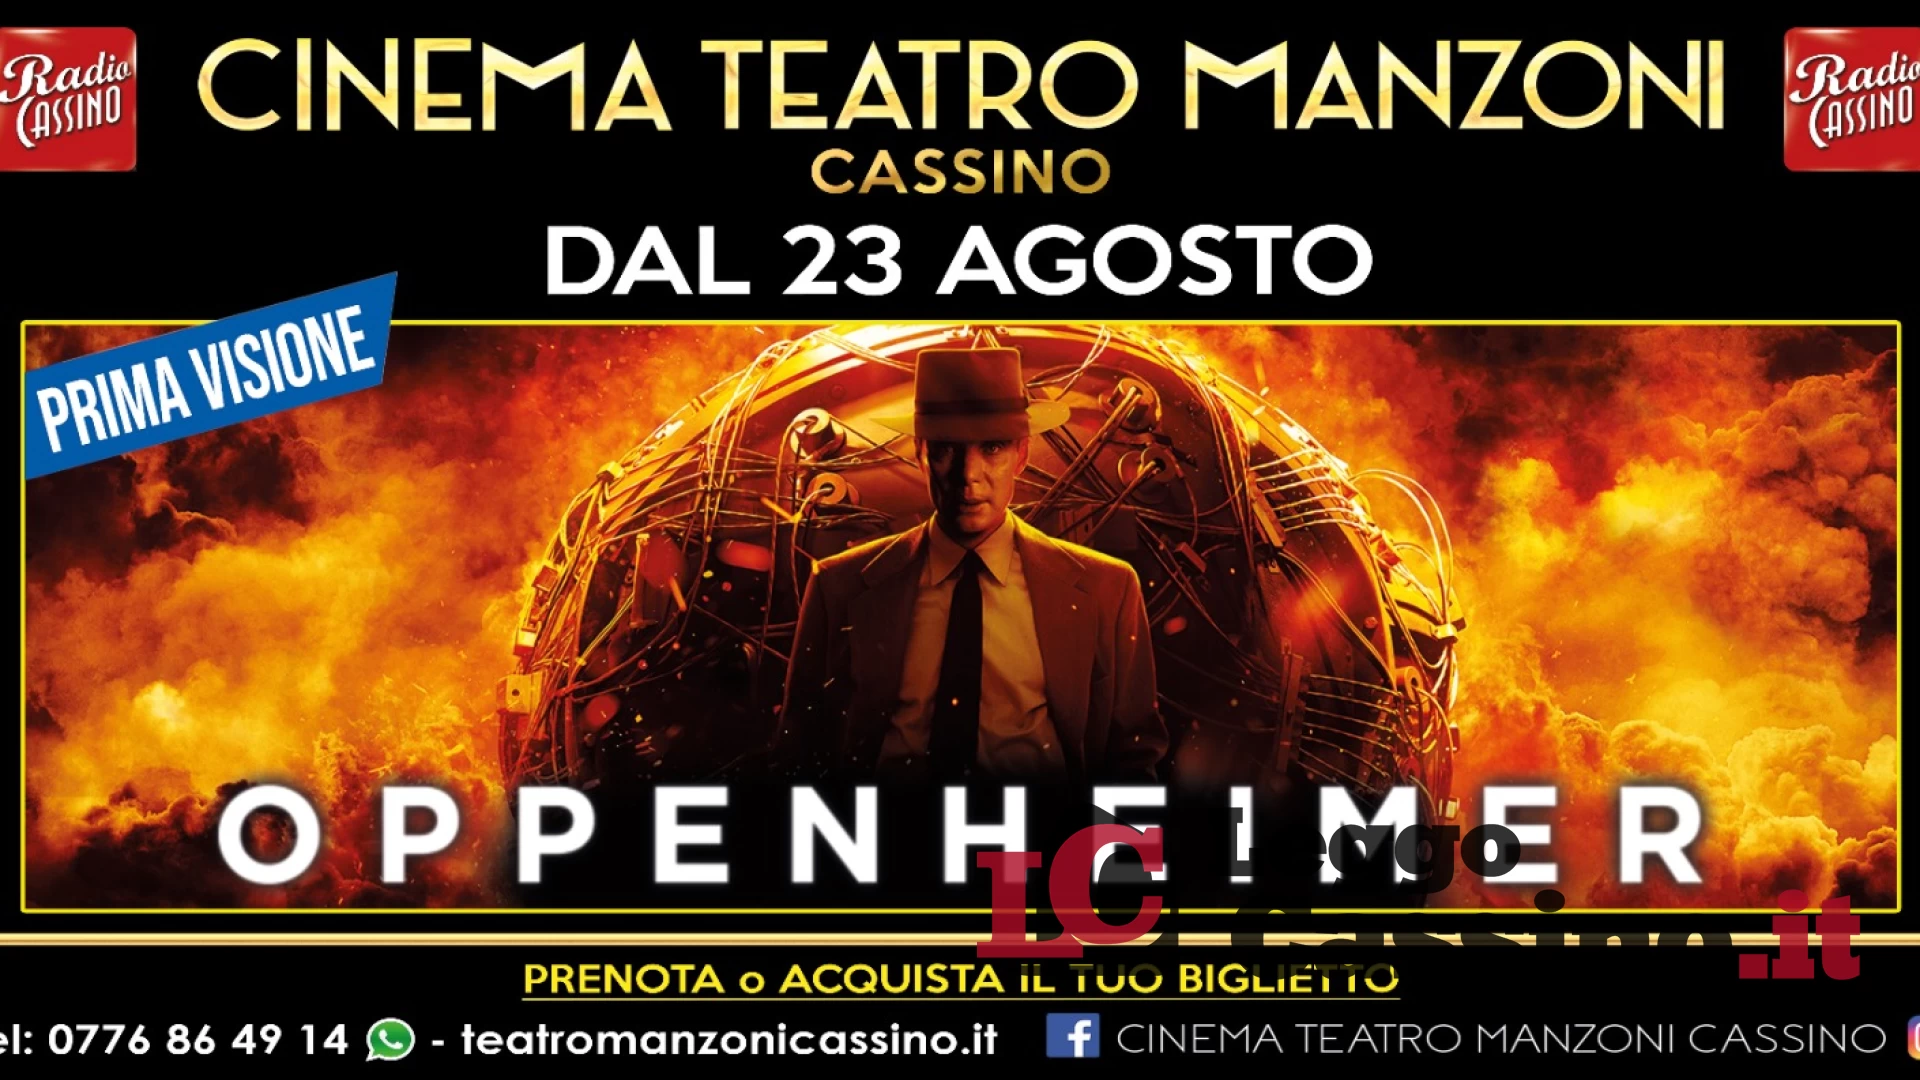 Cinema Teatro Manzoni di Cassino, arriva Oppenheimer